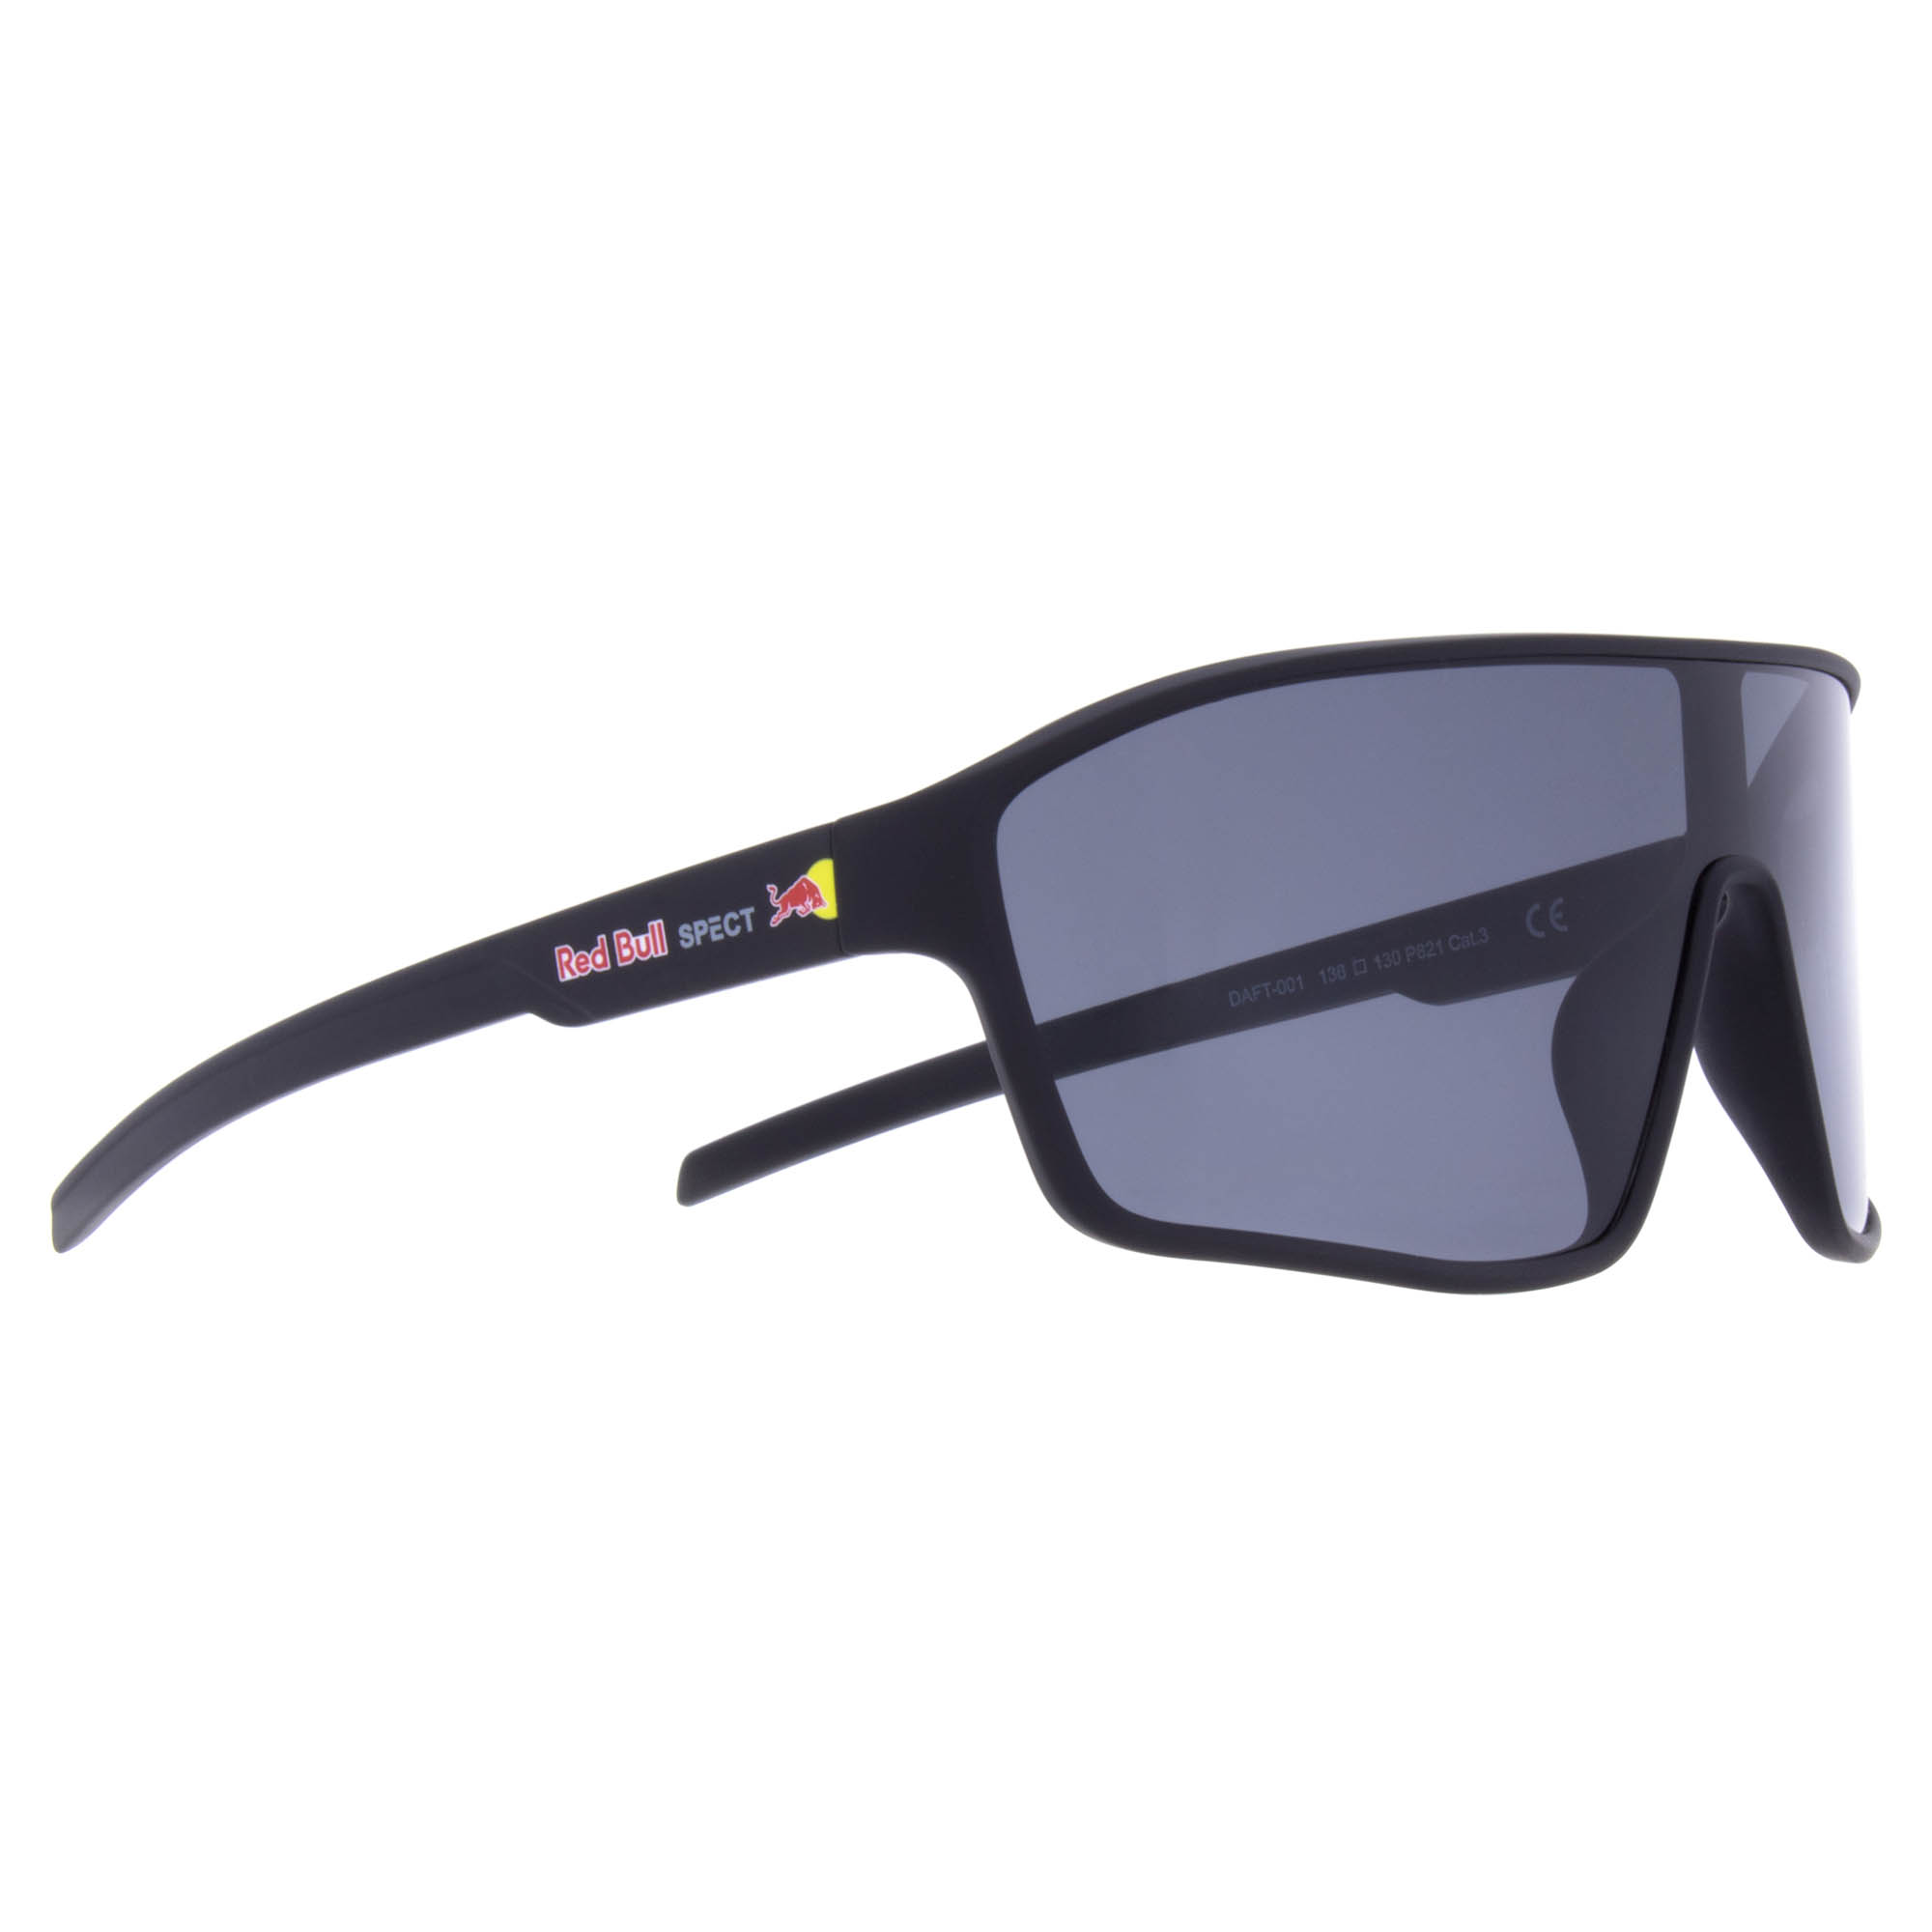 Sunglasses Daft-001